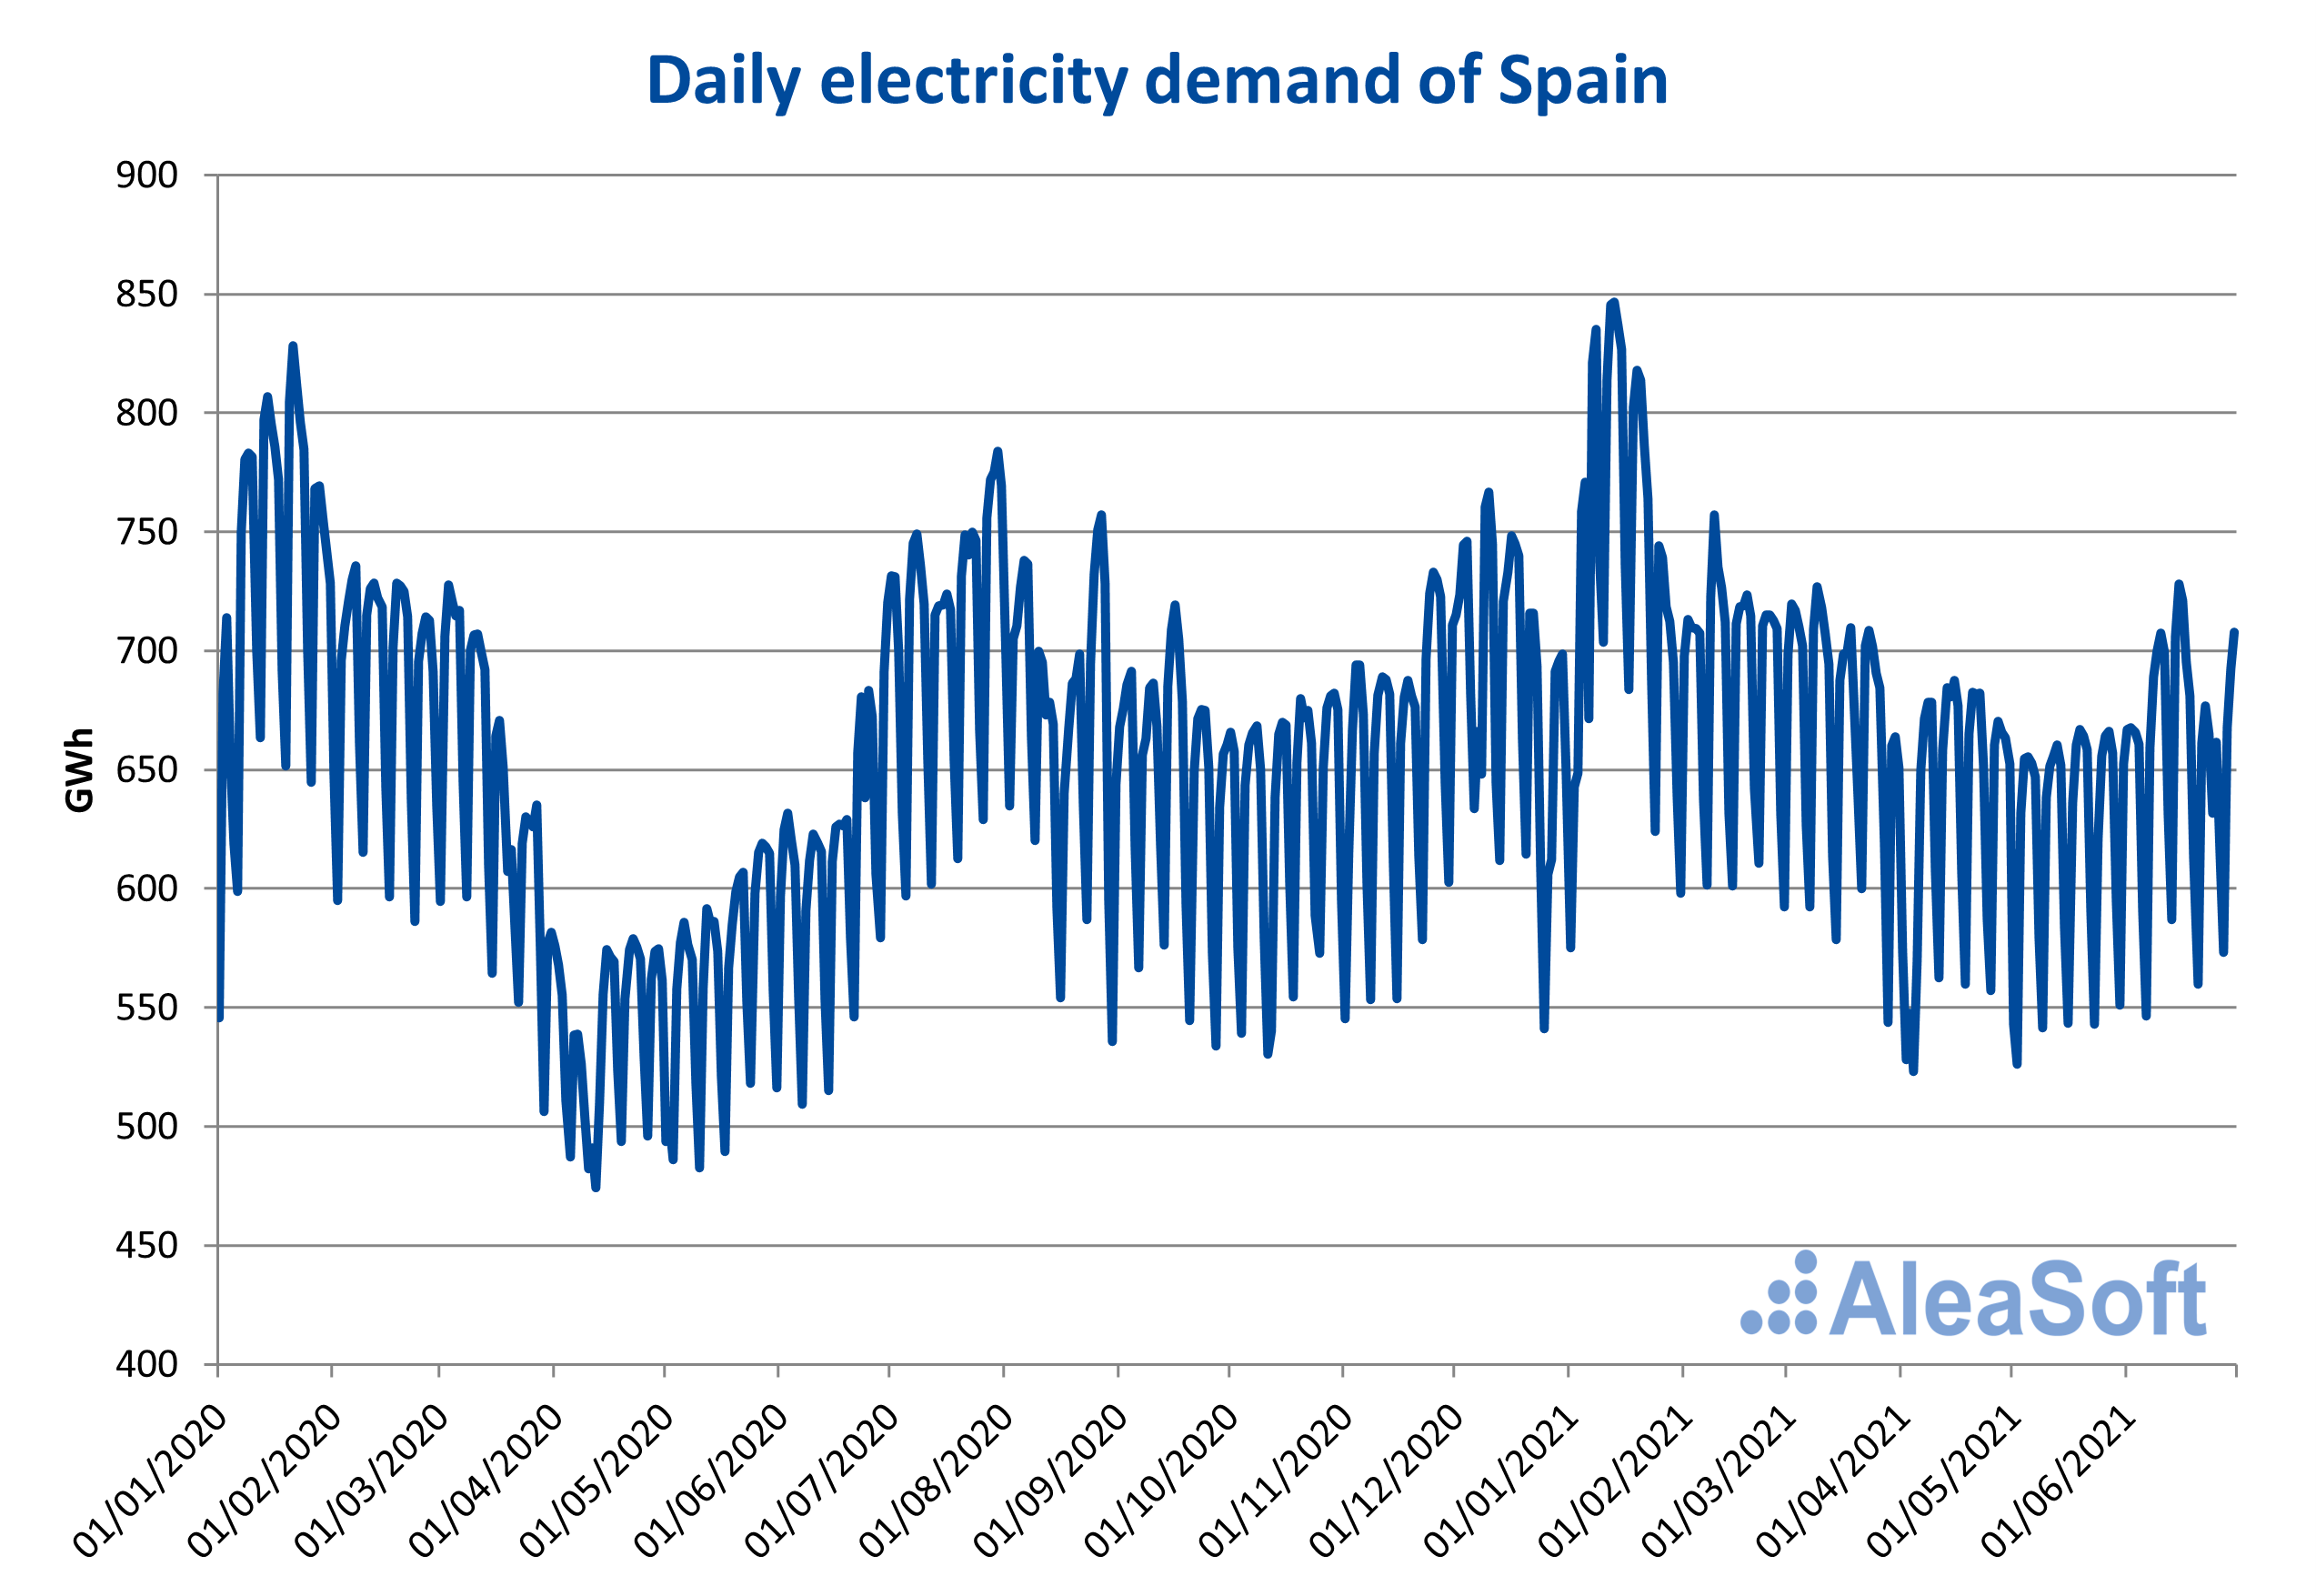 AleaSoft - Spain daily demand